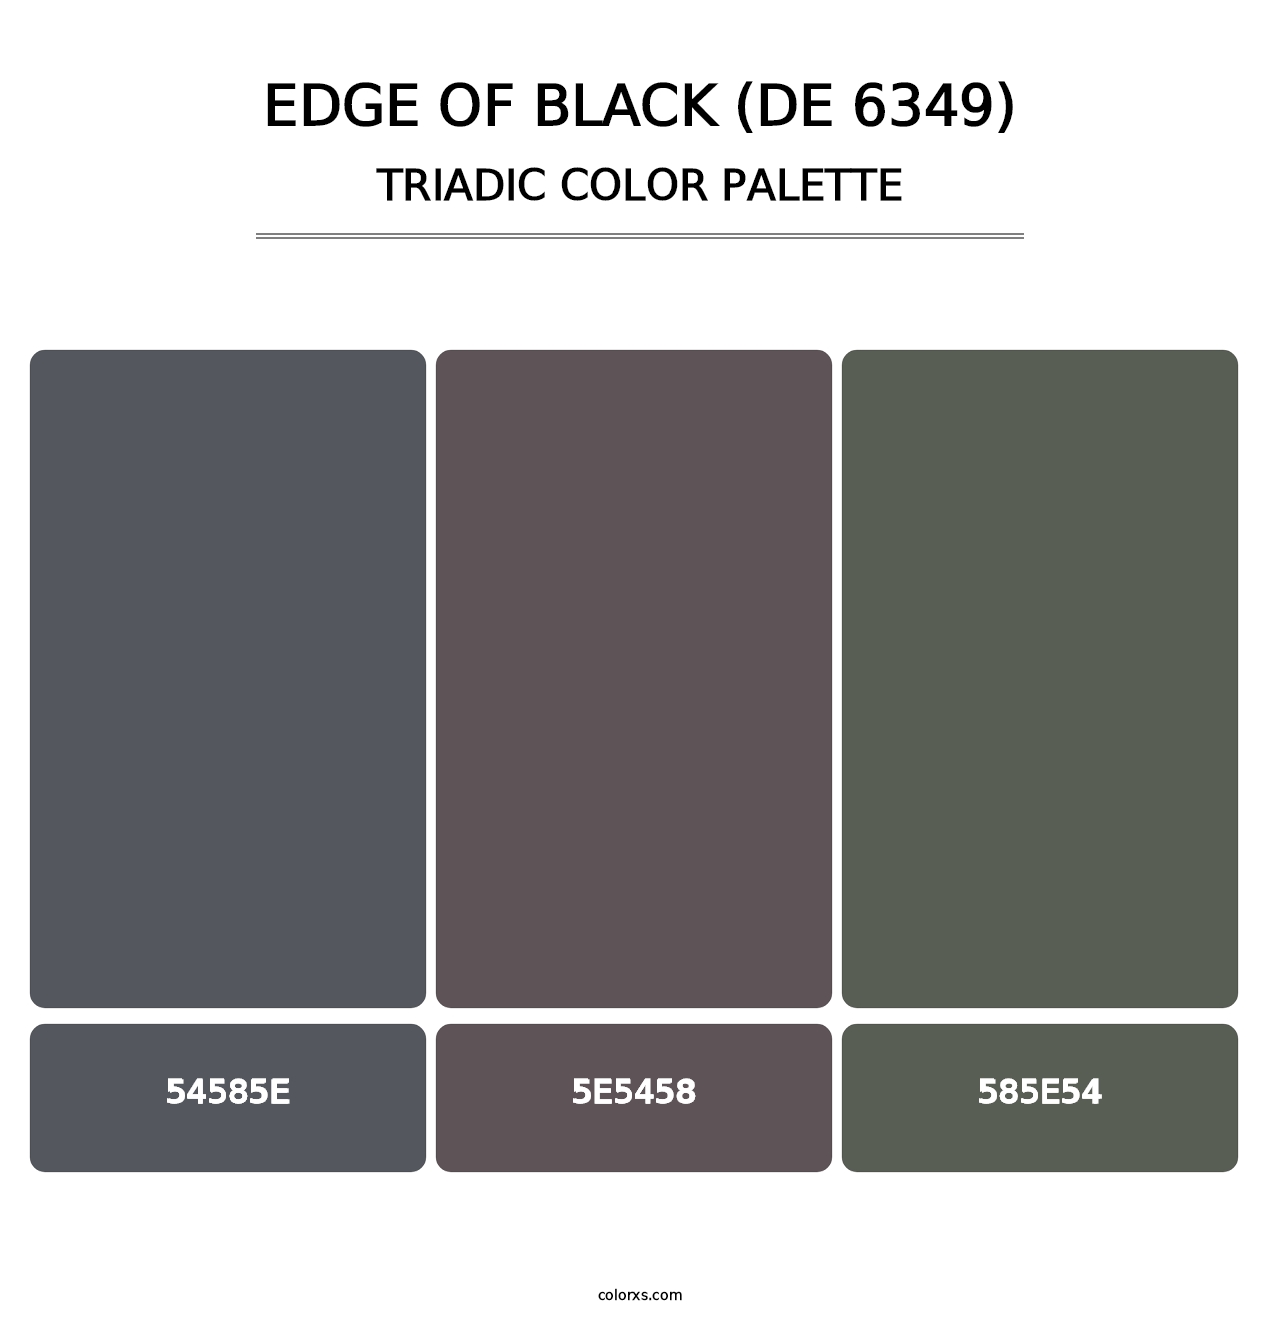 Edge of Black (DE 6349) - Triadic Color Palette